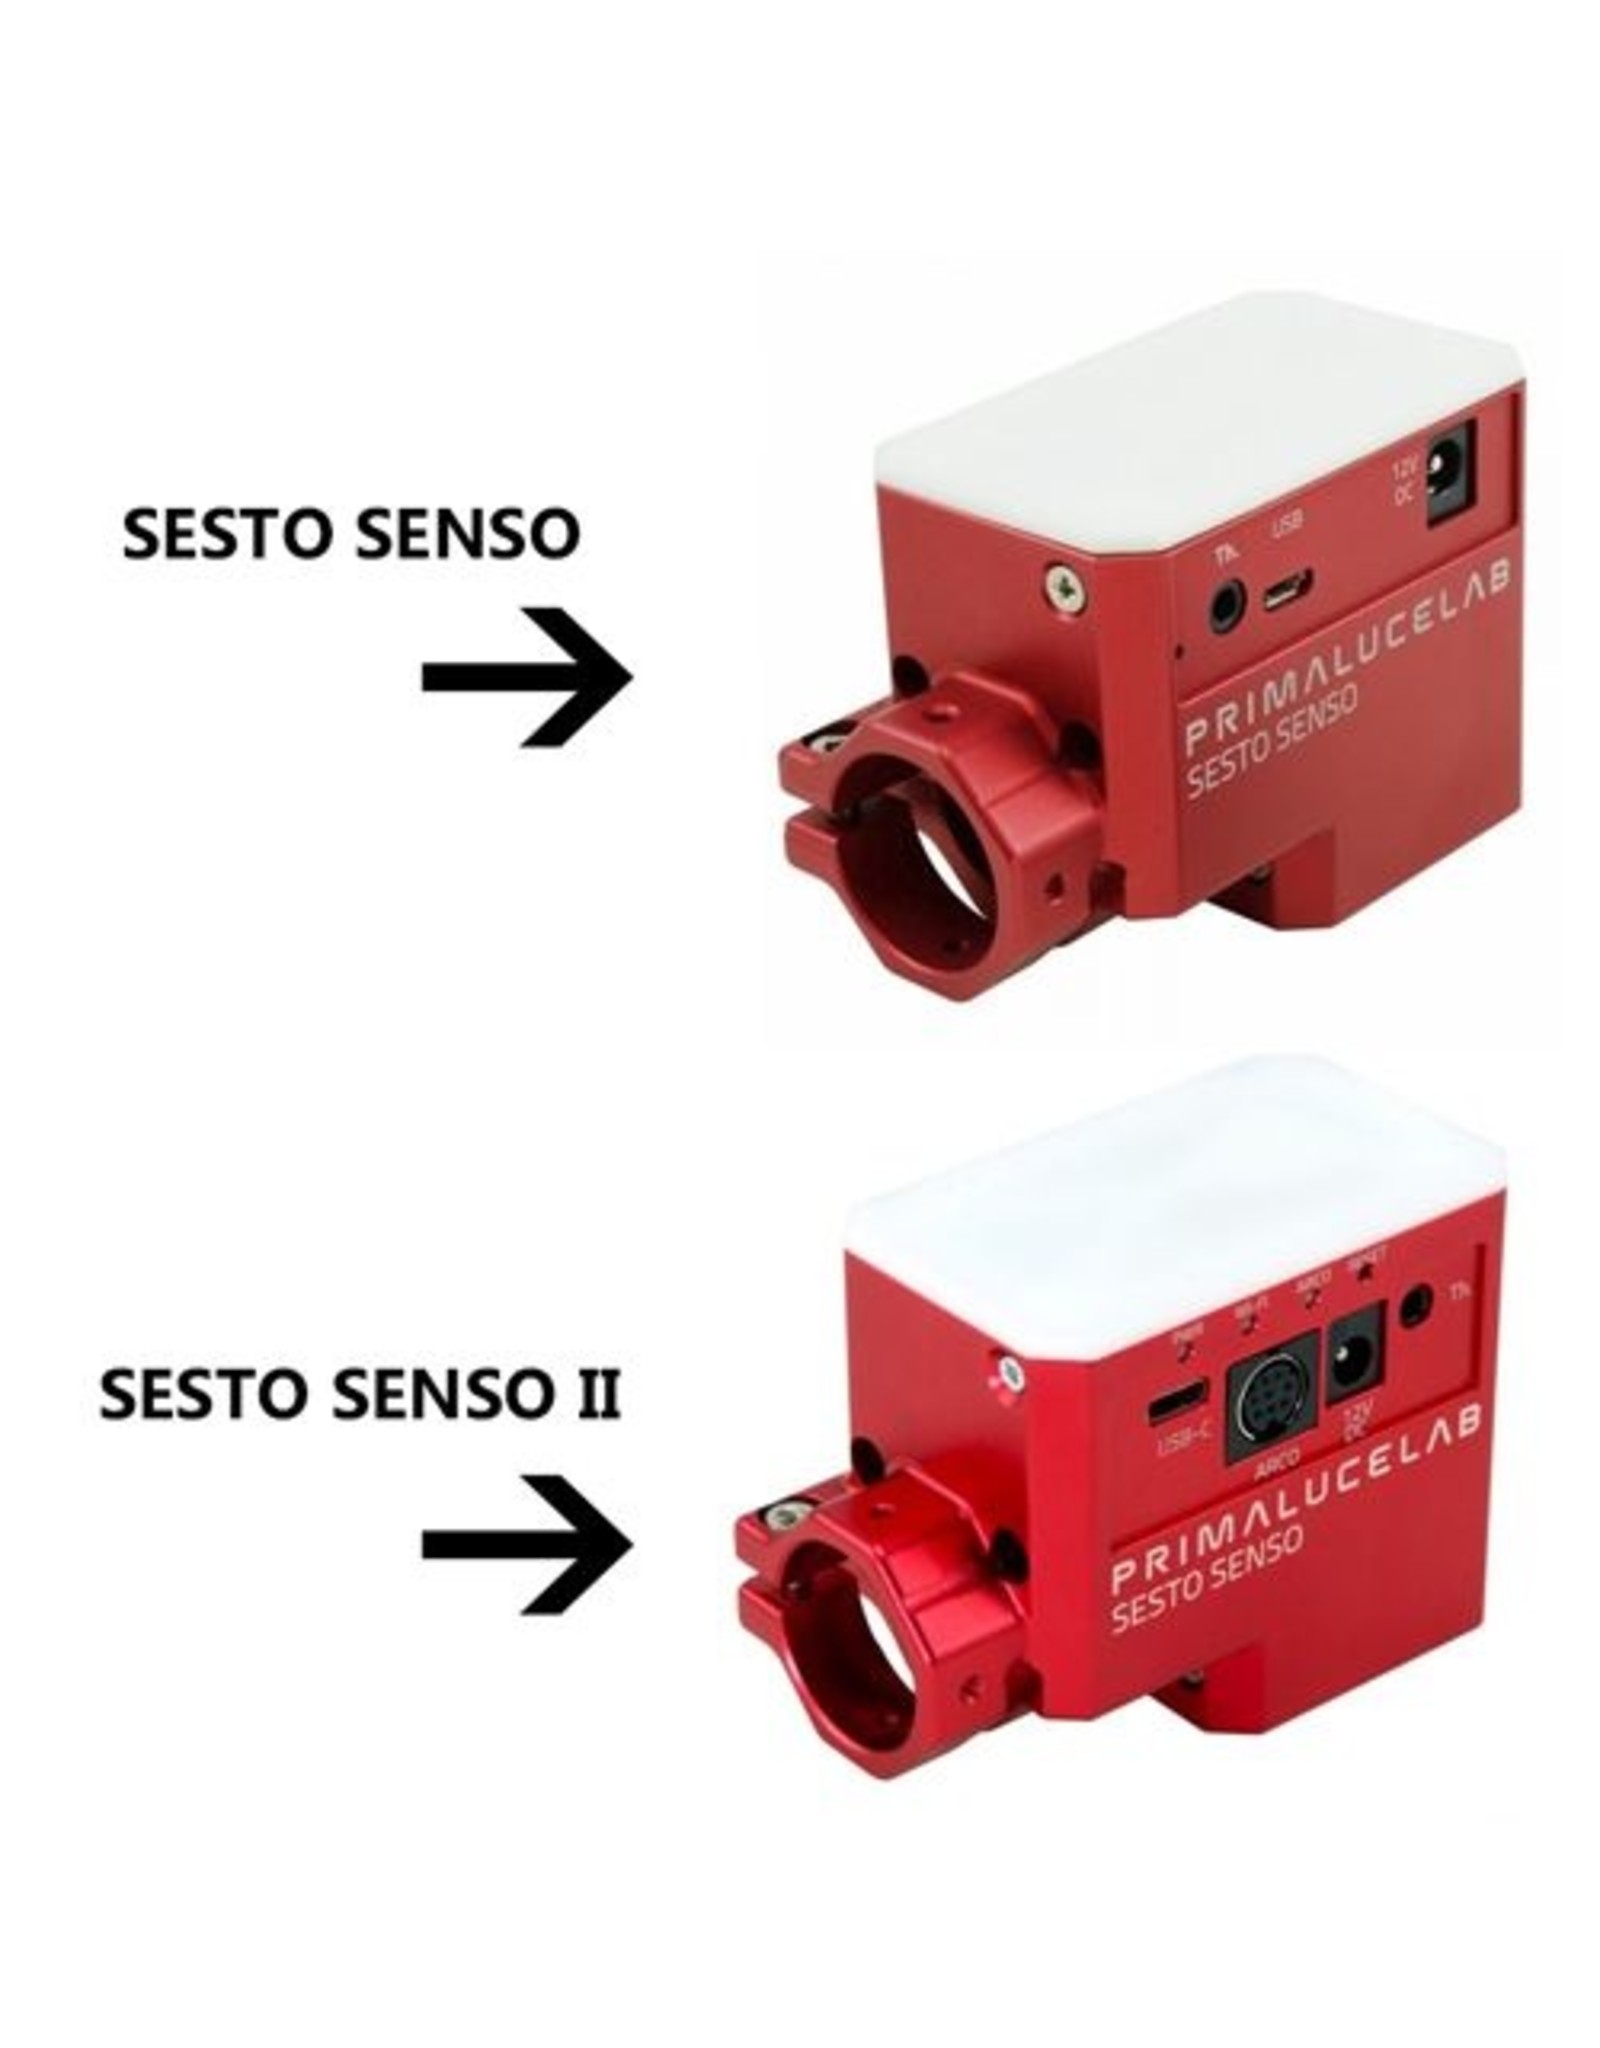 PrimaLuceLab PrimaLuceLab 26mm Adapter for Sesto Senso 2 - SESTOSENSO-AD26II